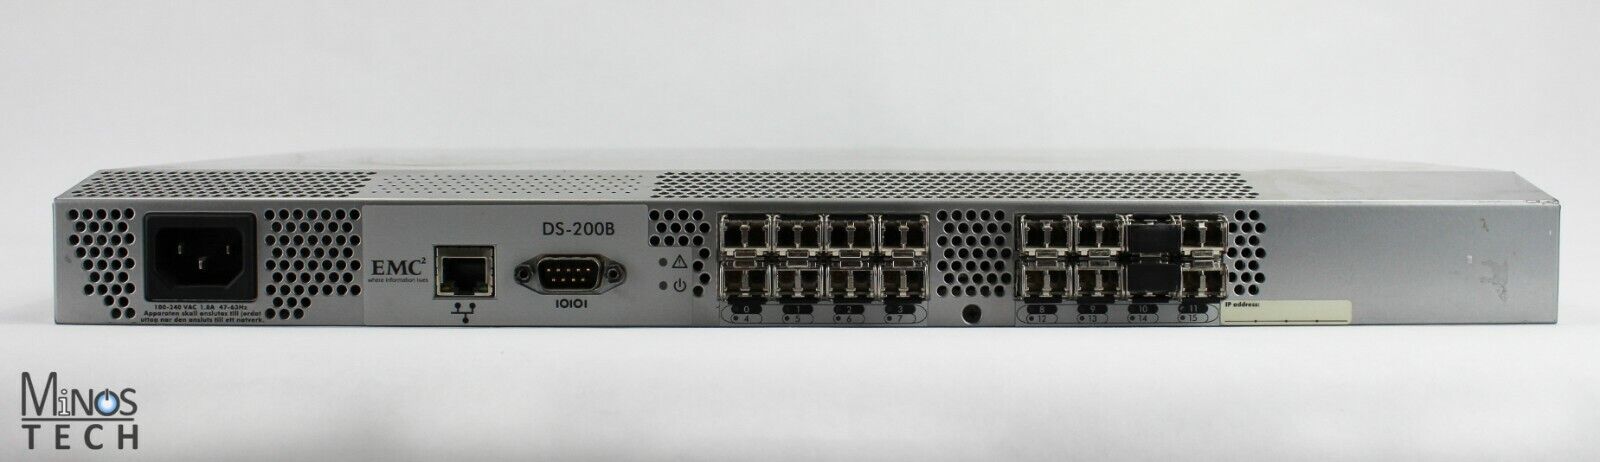 EMC Silkworm 200E EMC DS-200B 16 Port Fibre Channel Switch        